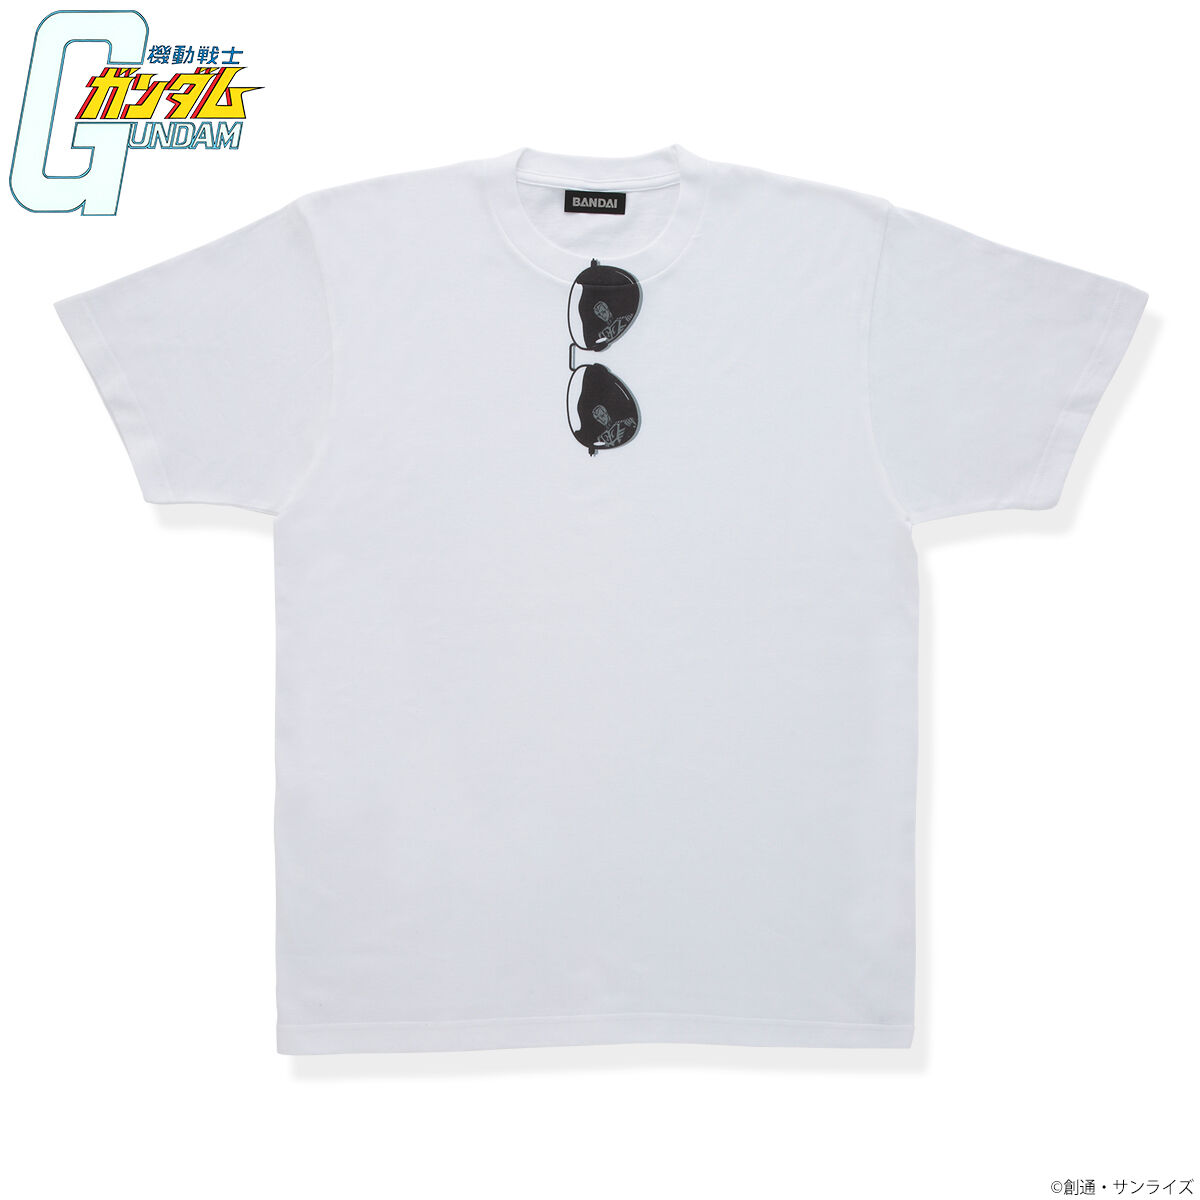 Mobile Suit Gundam Char's Sunglasses T-Shirt